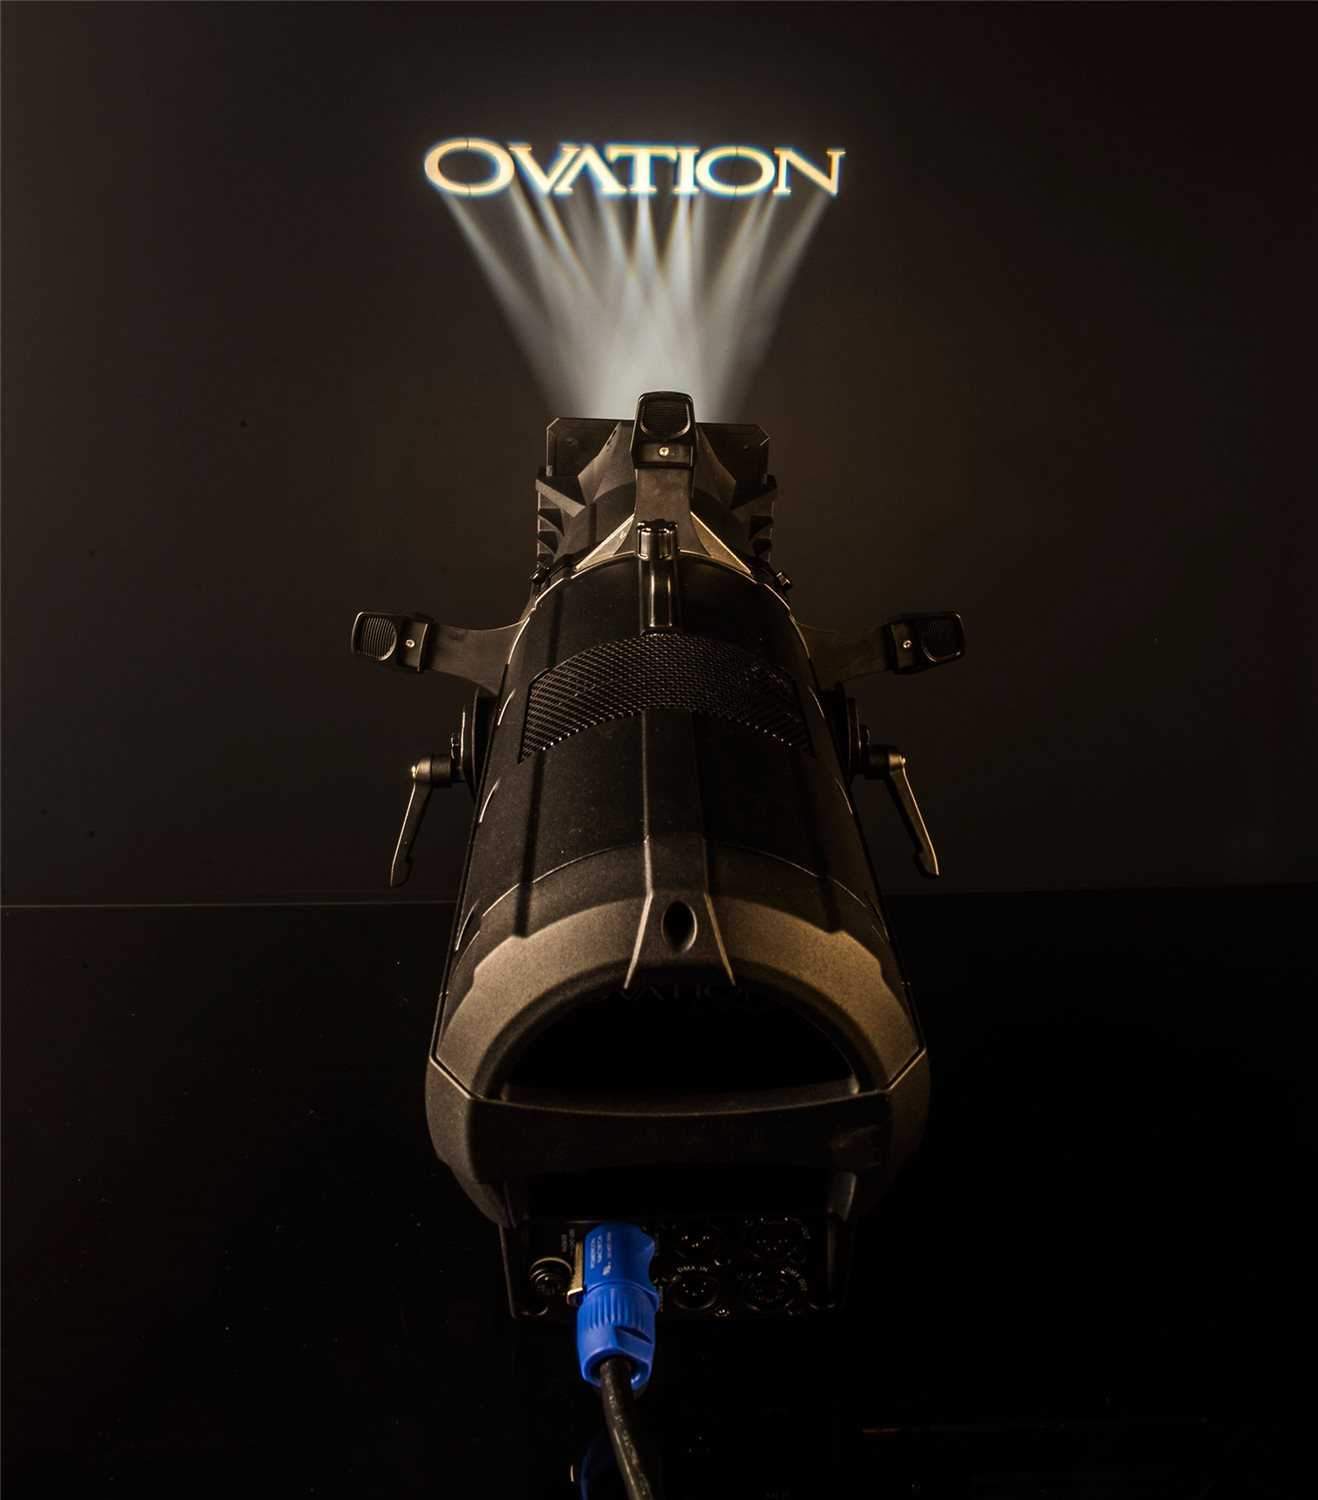 Chauvet Ovation E-260WW 36-Degree LED Ellipsoidal Light - PSSL ProSound and Stage Lighting